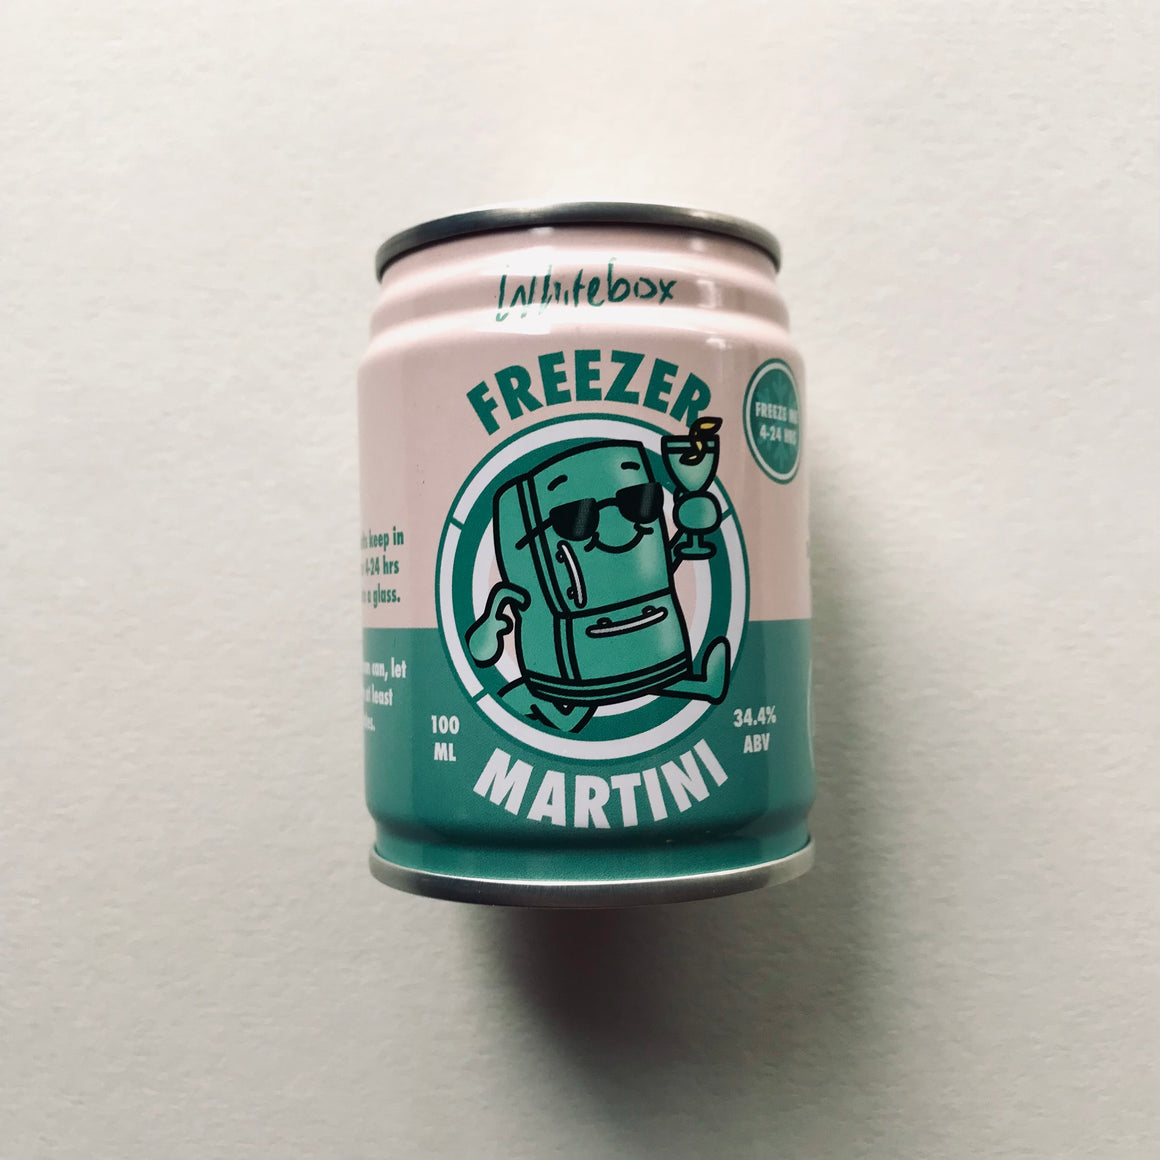 Whitebox Freezer Martini  34.4%